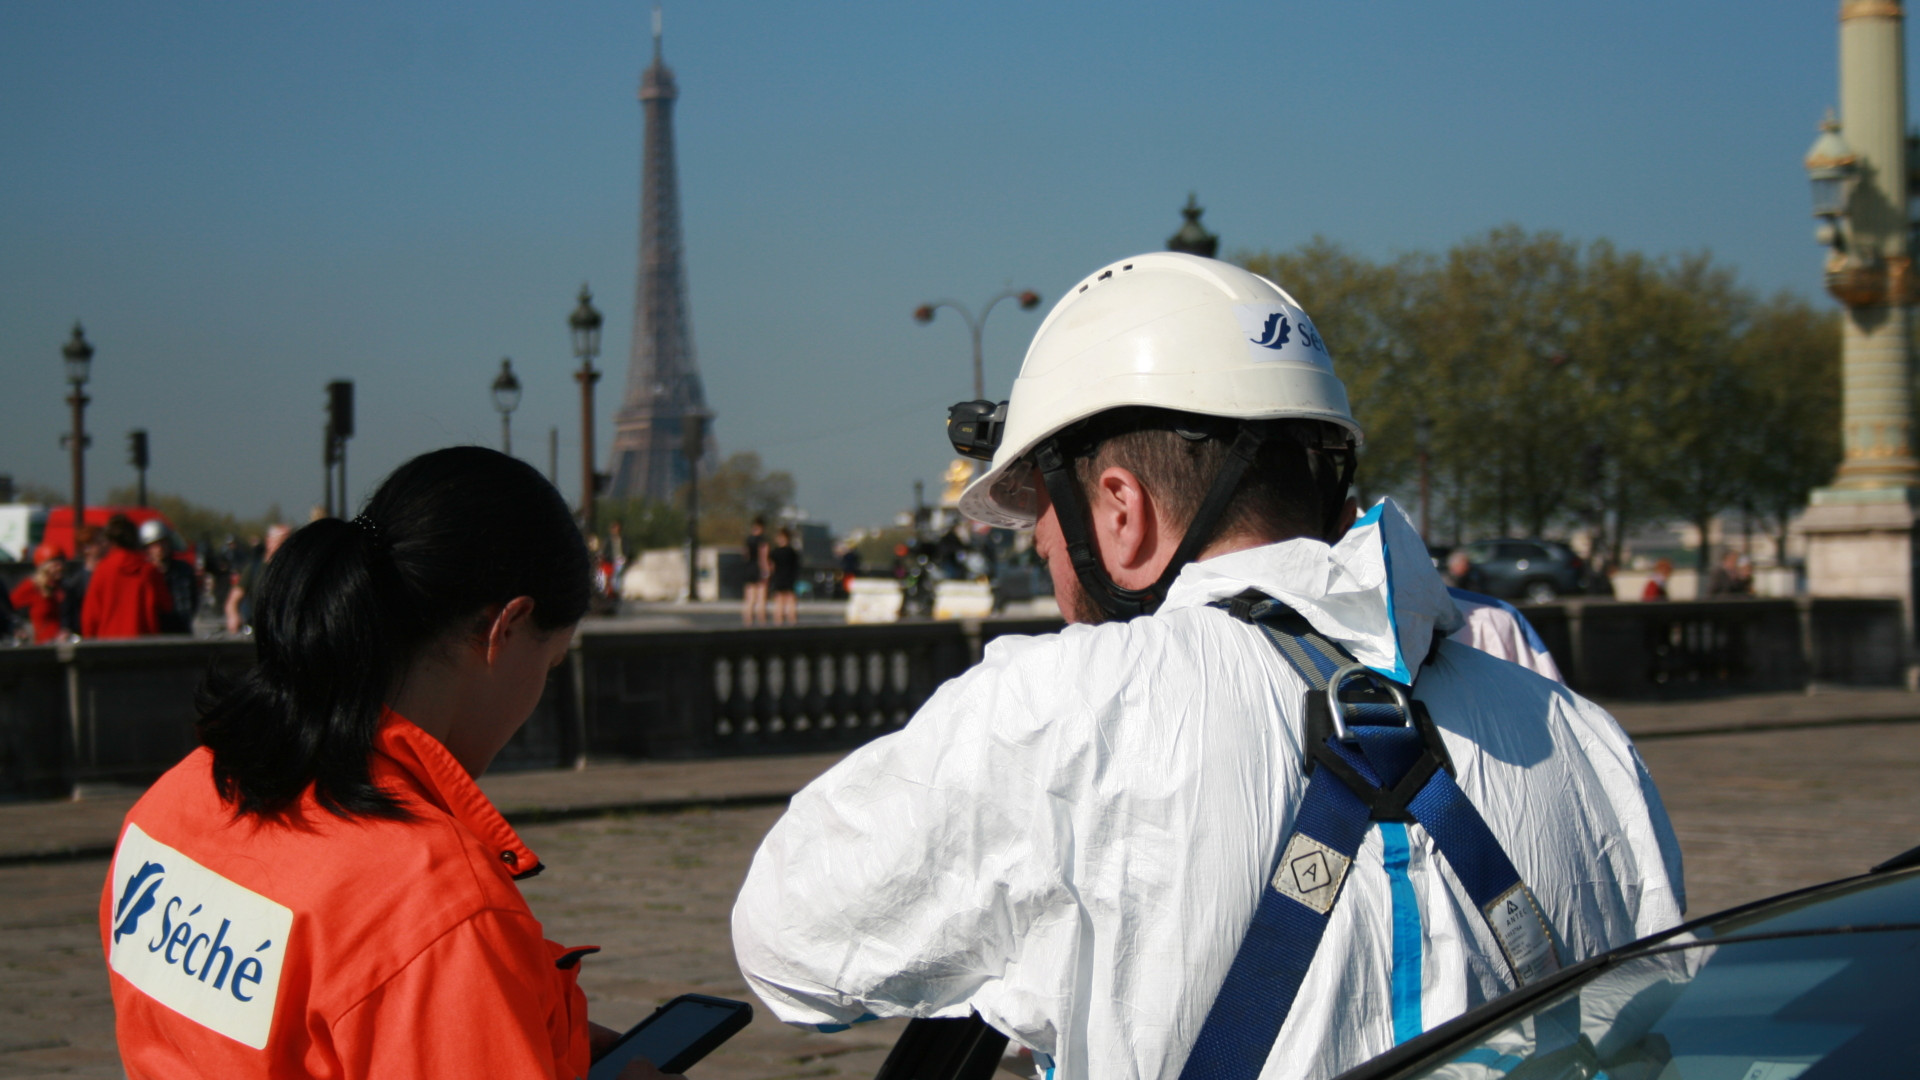 2 agentes secados en las calles de París © Séché Environnement